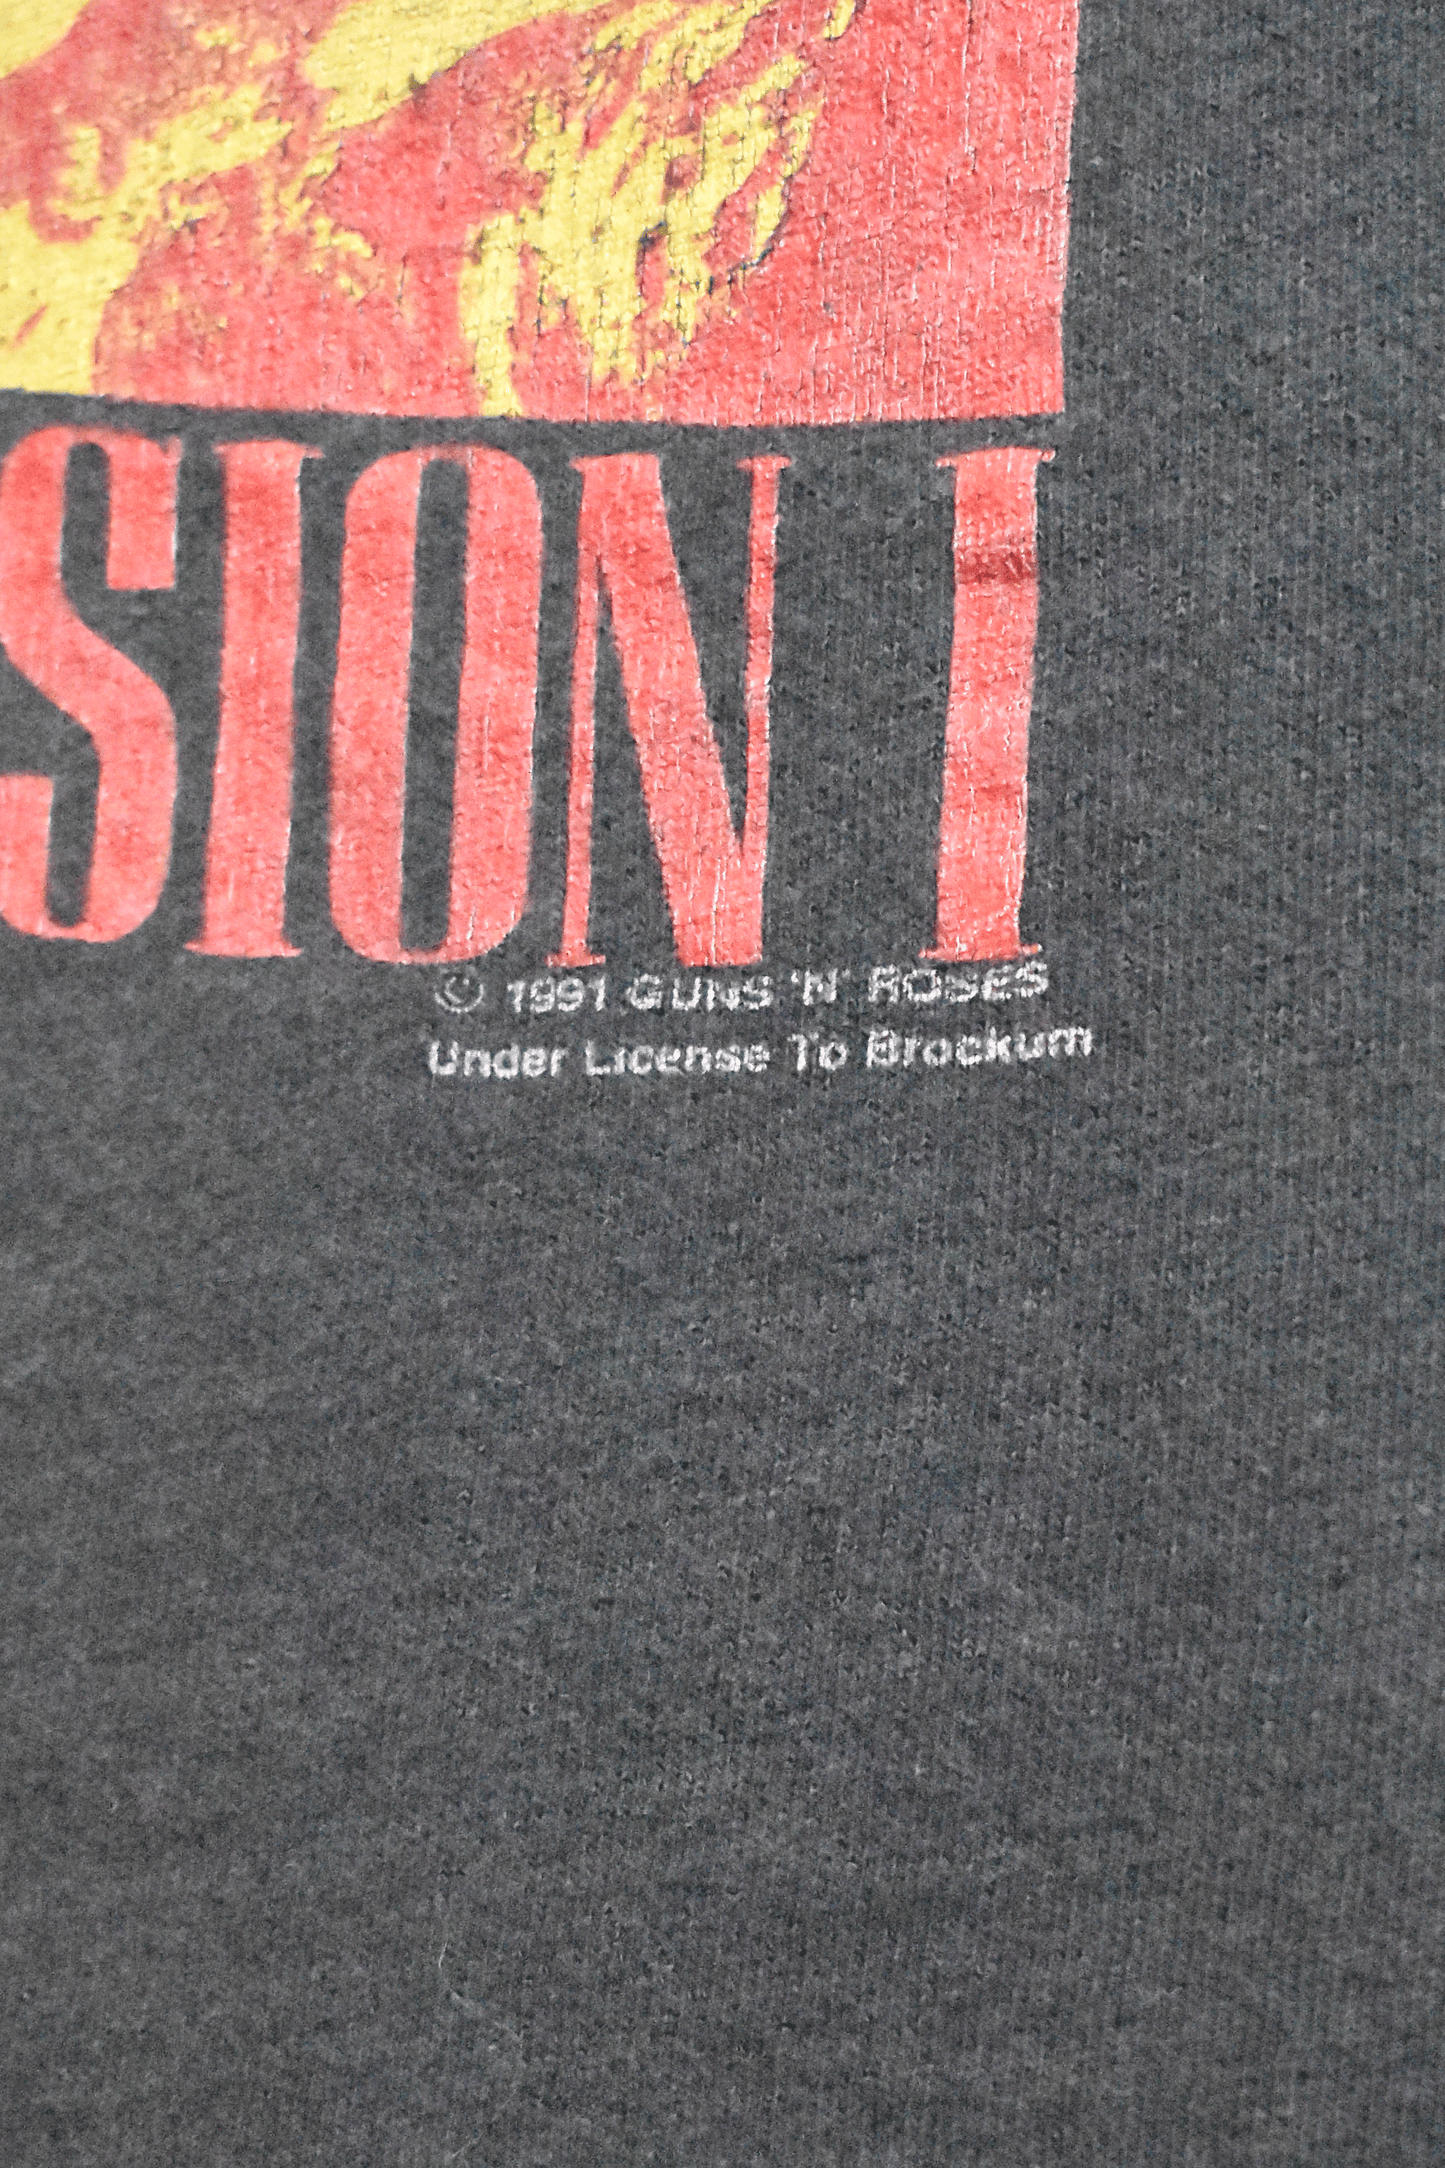 Vintage 1991 "Guns N' Roses Use Your Illusion I" Tour T-shirt